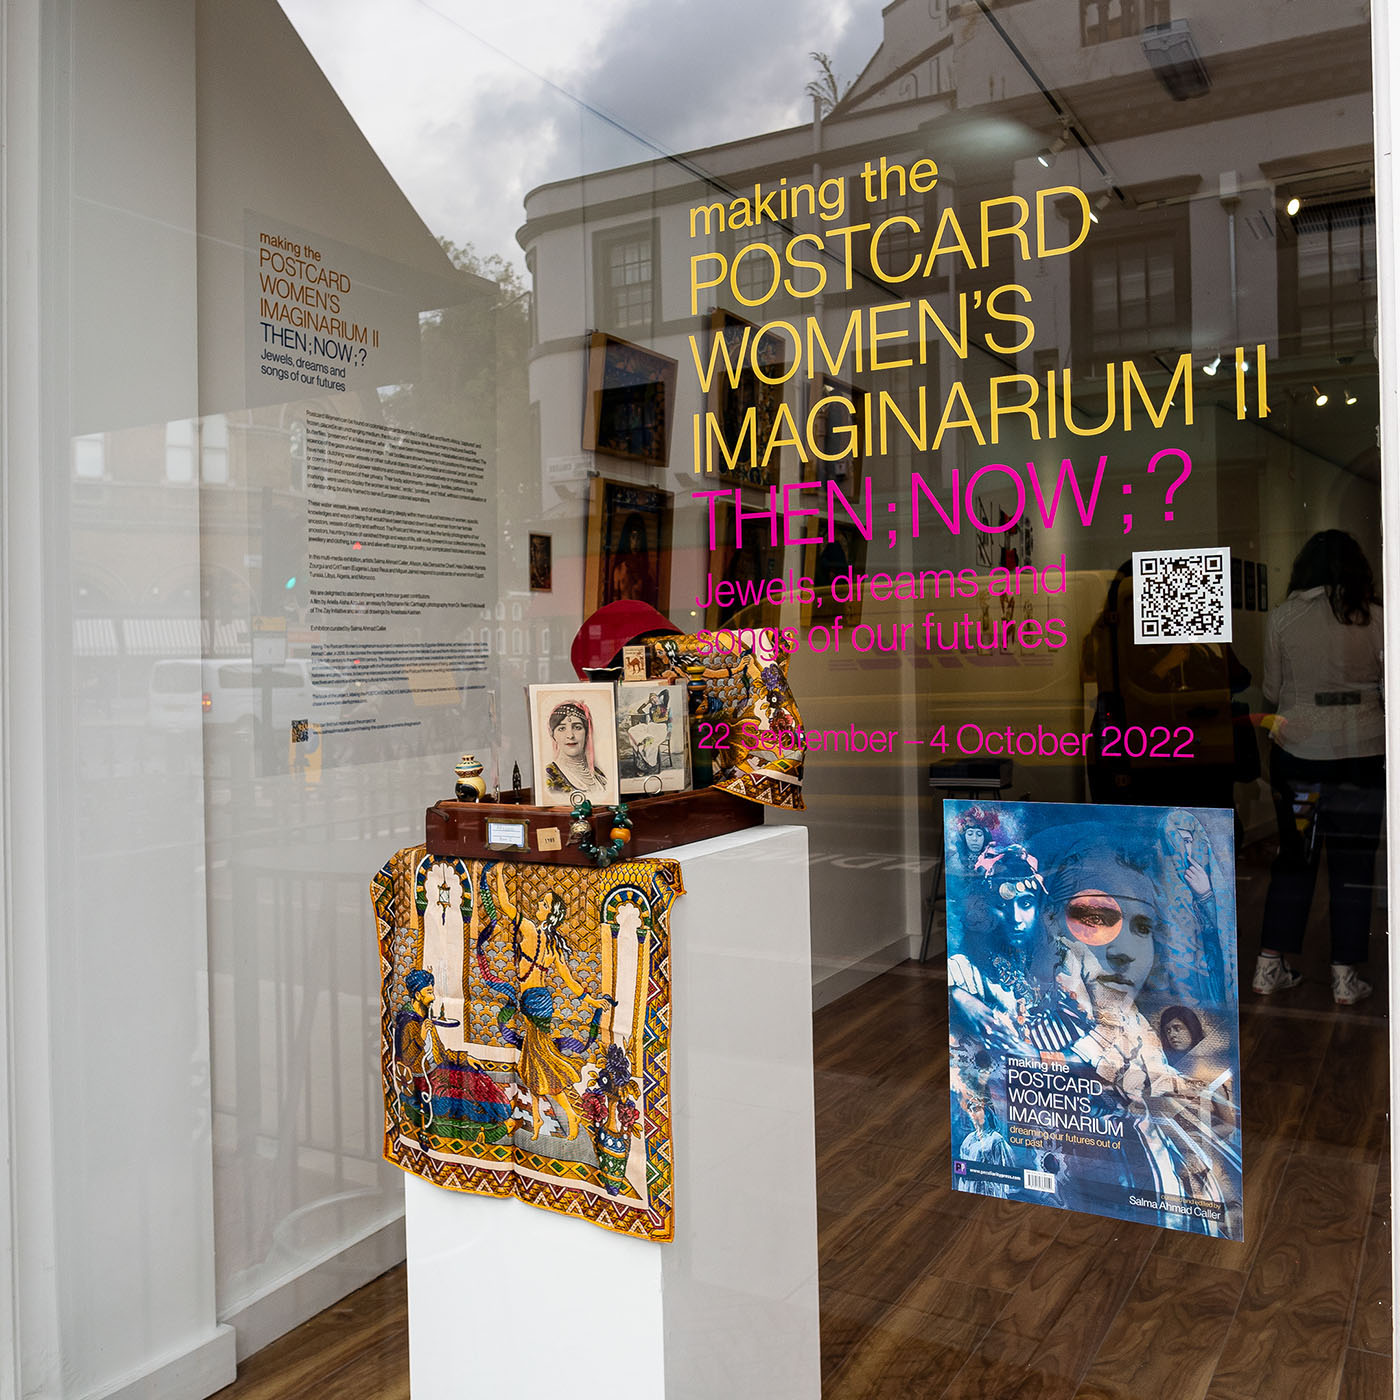 The Imaginarium exhibition at the Camden Gallery, London